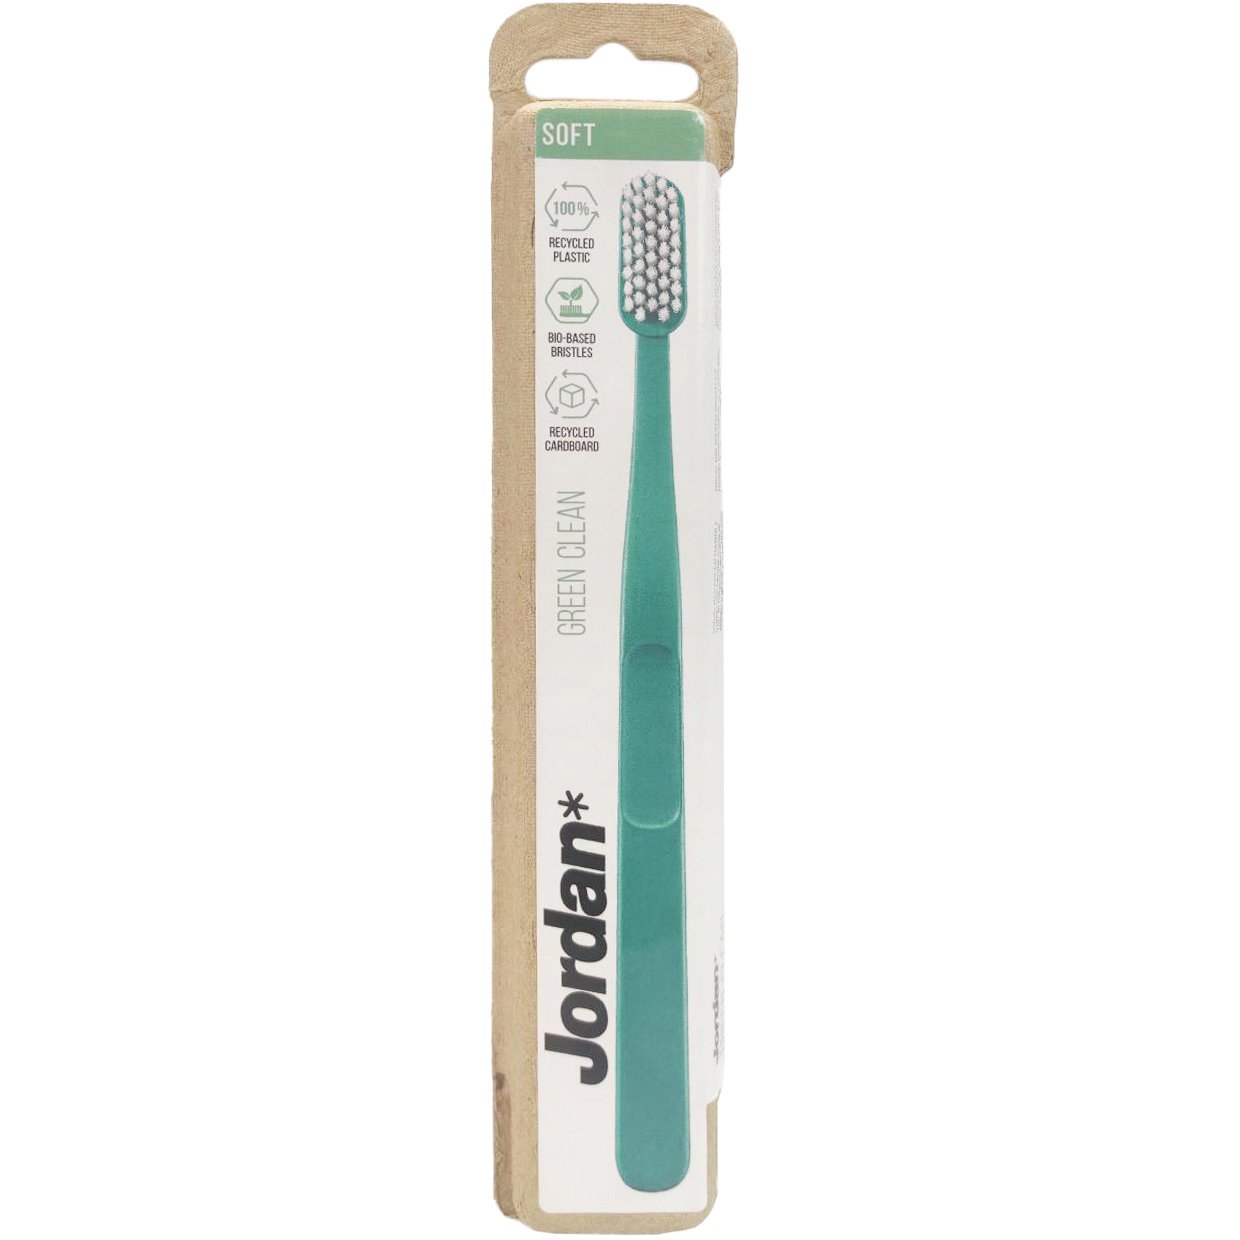 Jordan Green Clean Soft Toothbrush Bio Eco Χειροκίνητη Οδοντόβουρτσα Μαλακή, με Βιολογικής Προέλευσης Ίνες 1 Τεμάχιο – Πράσινο